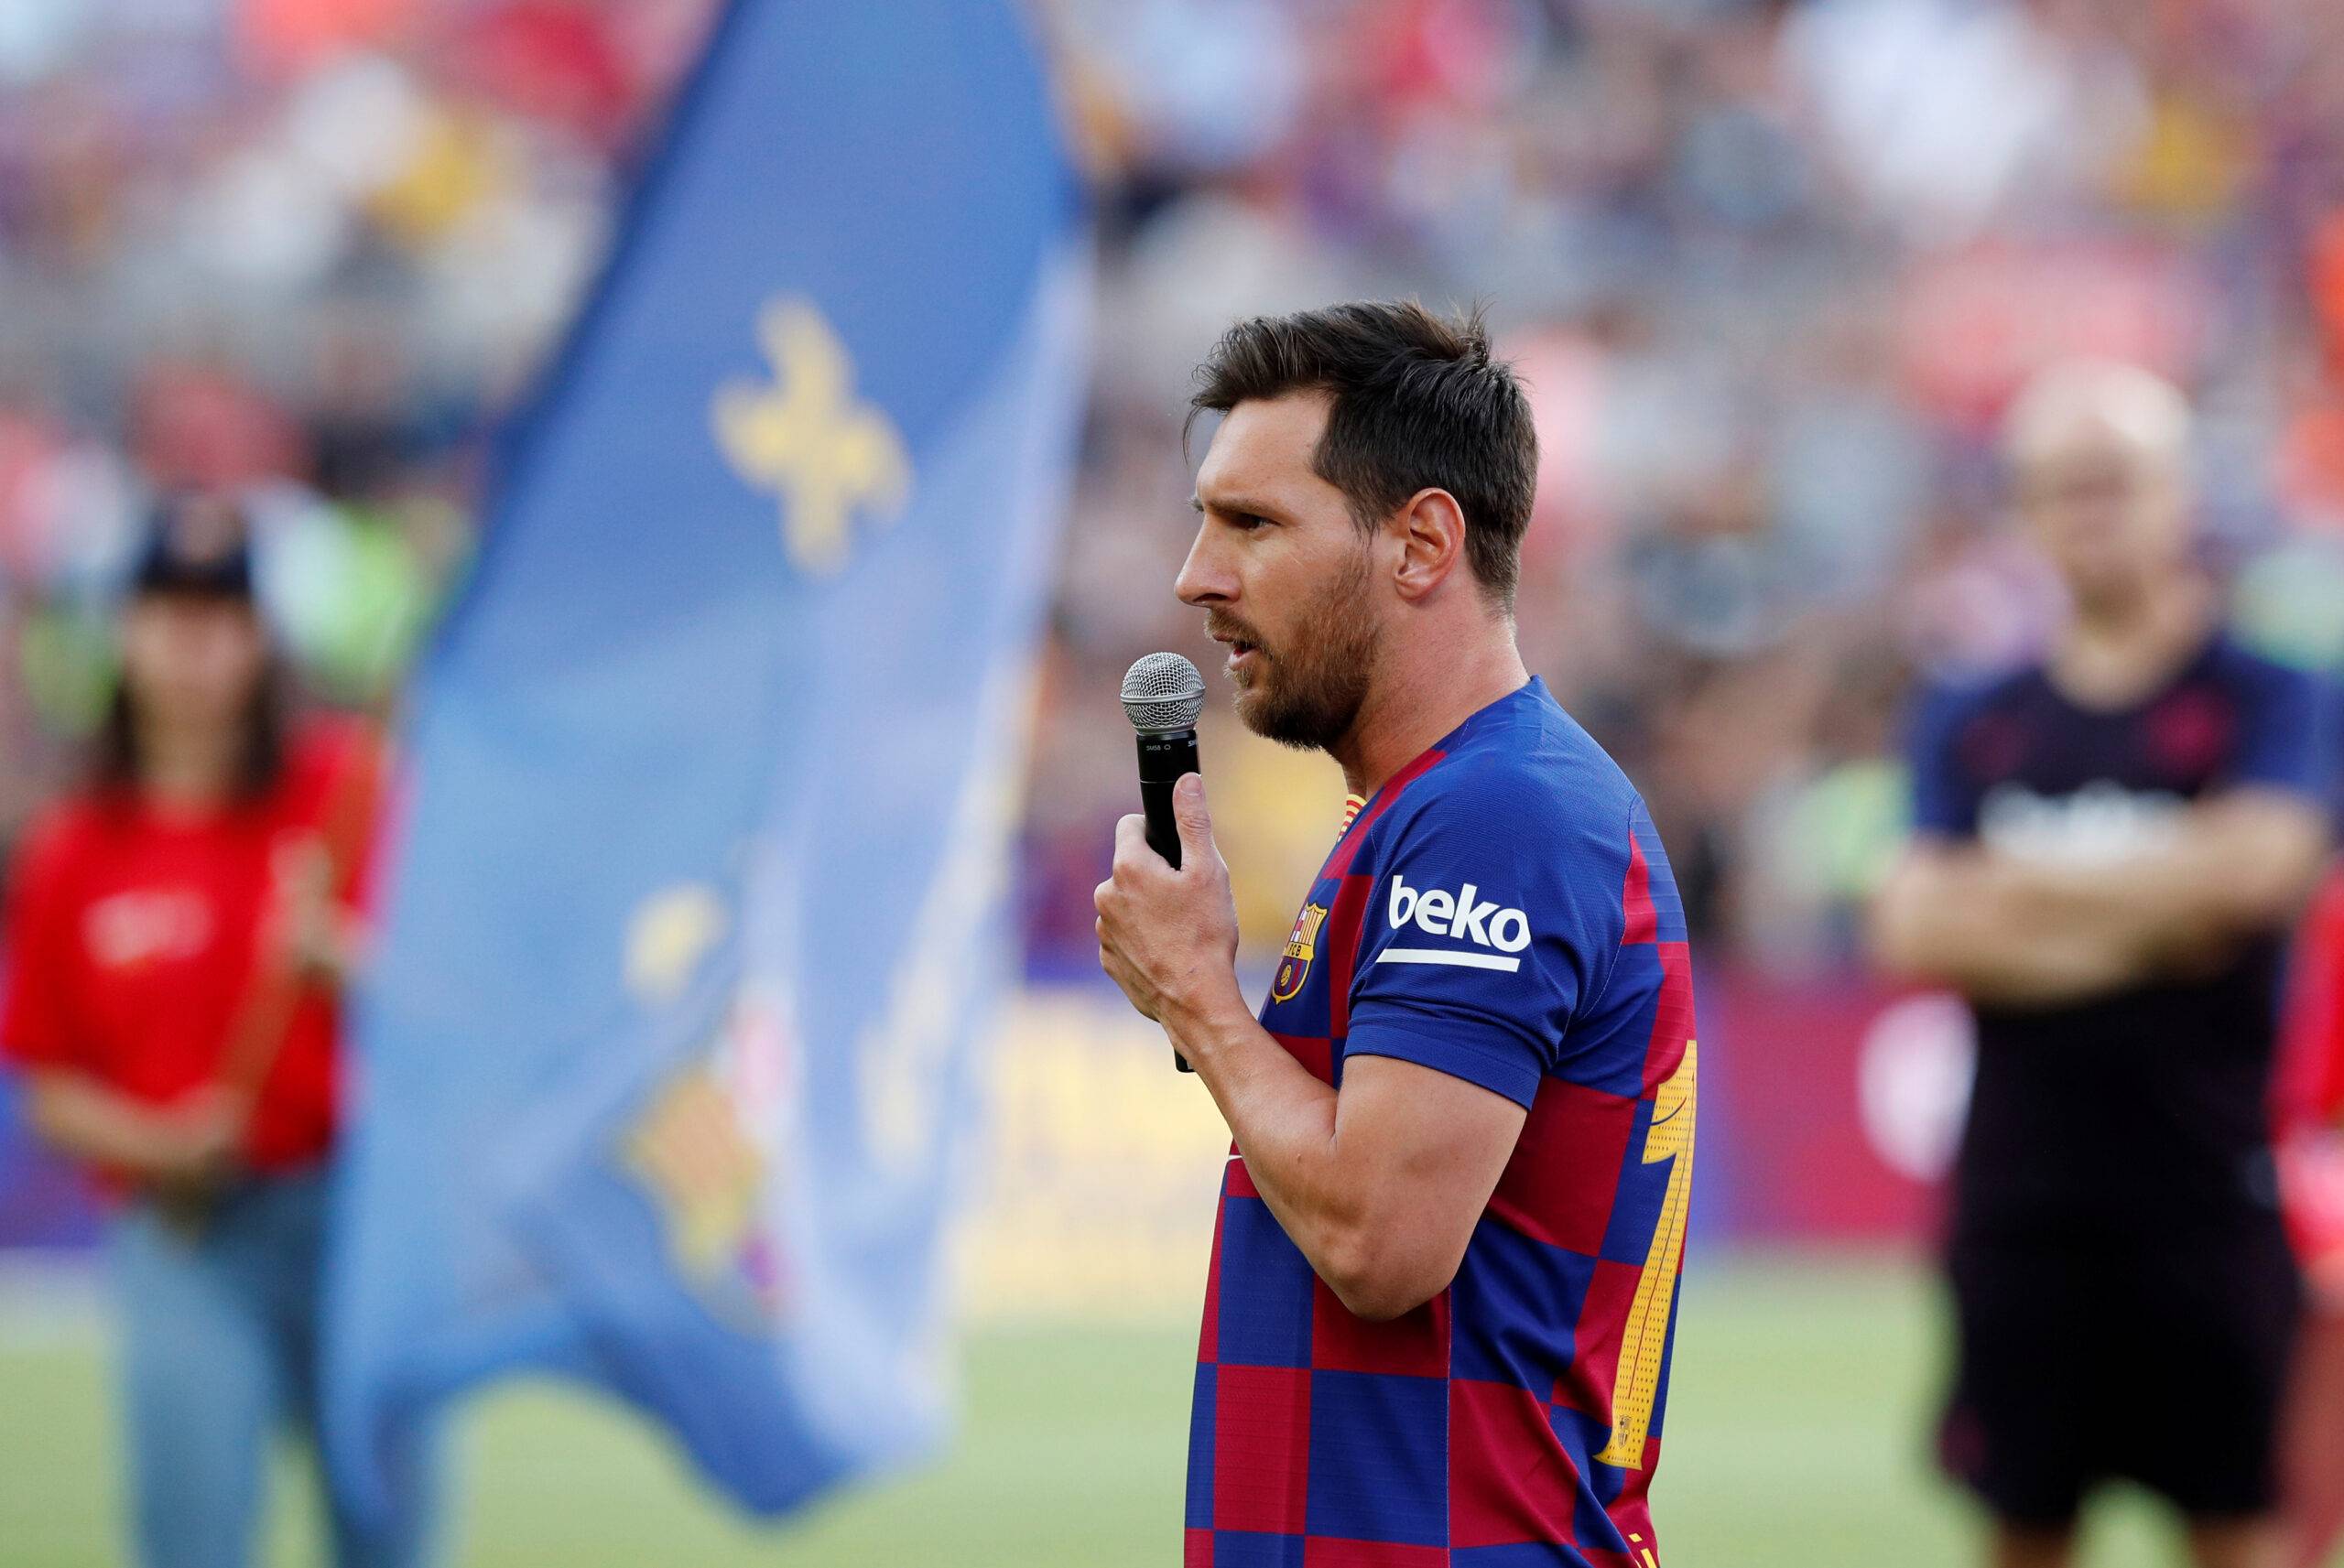 Messi as Barcelona captain.